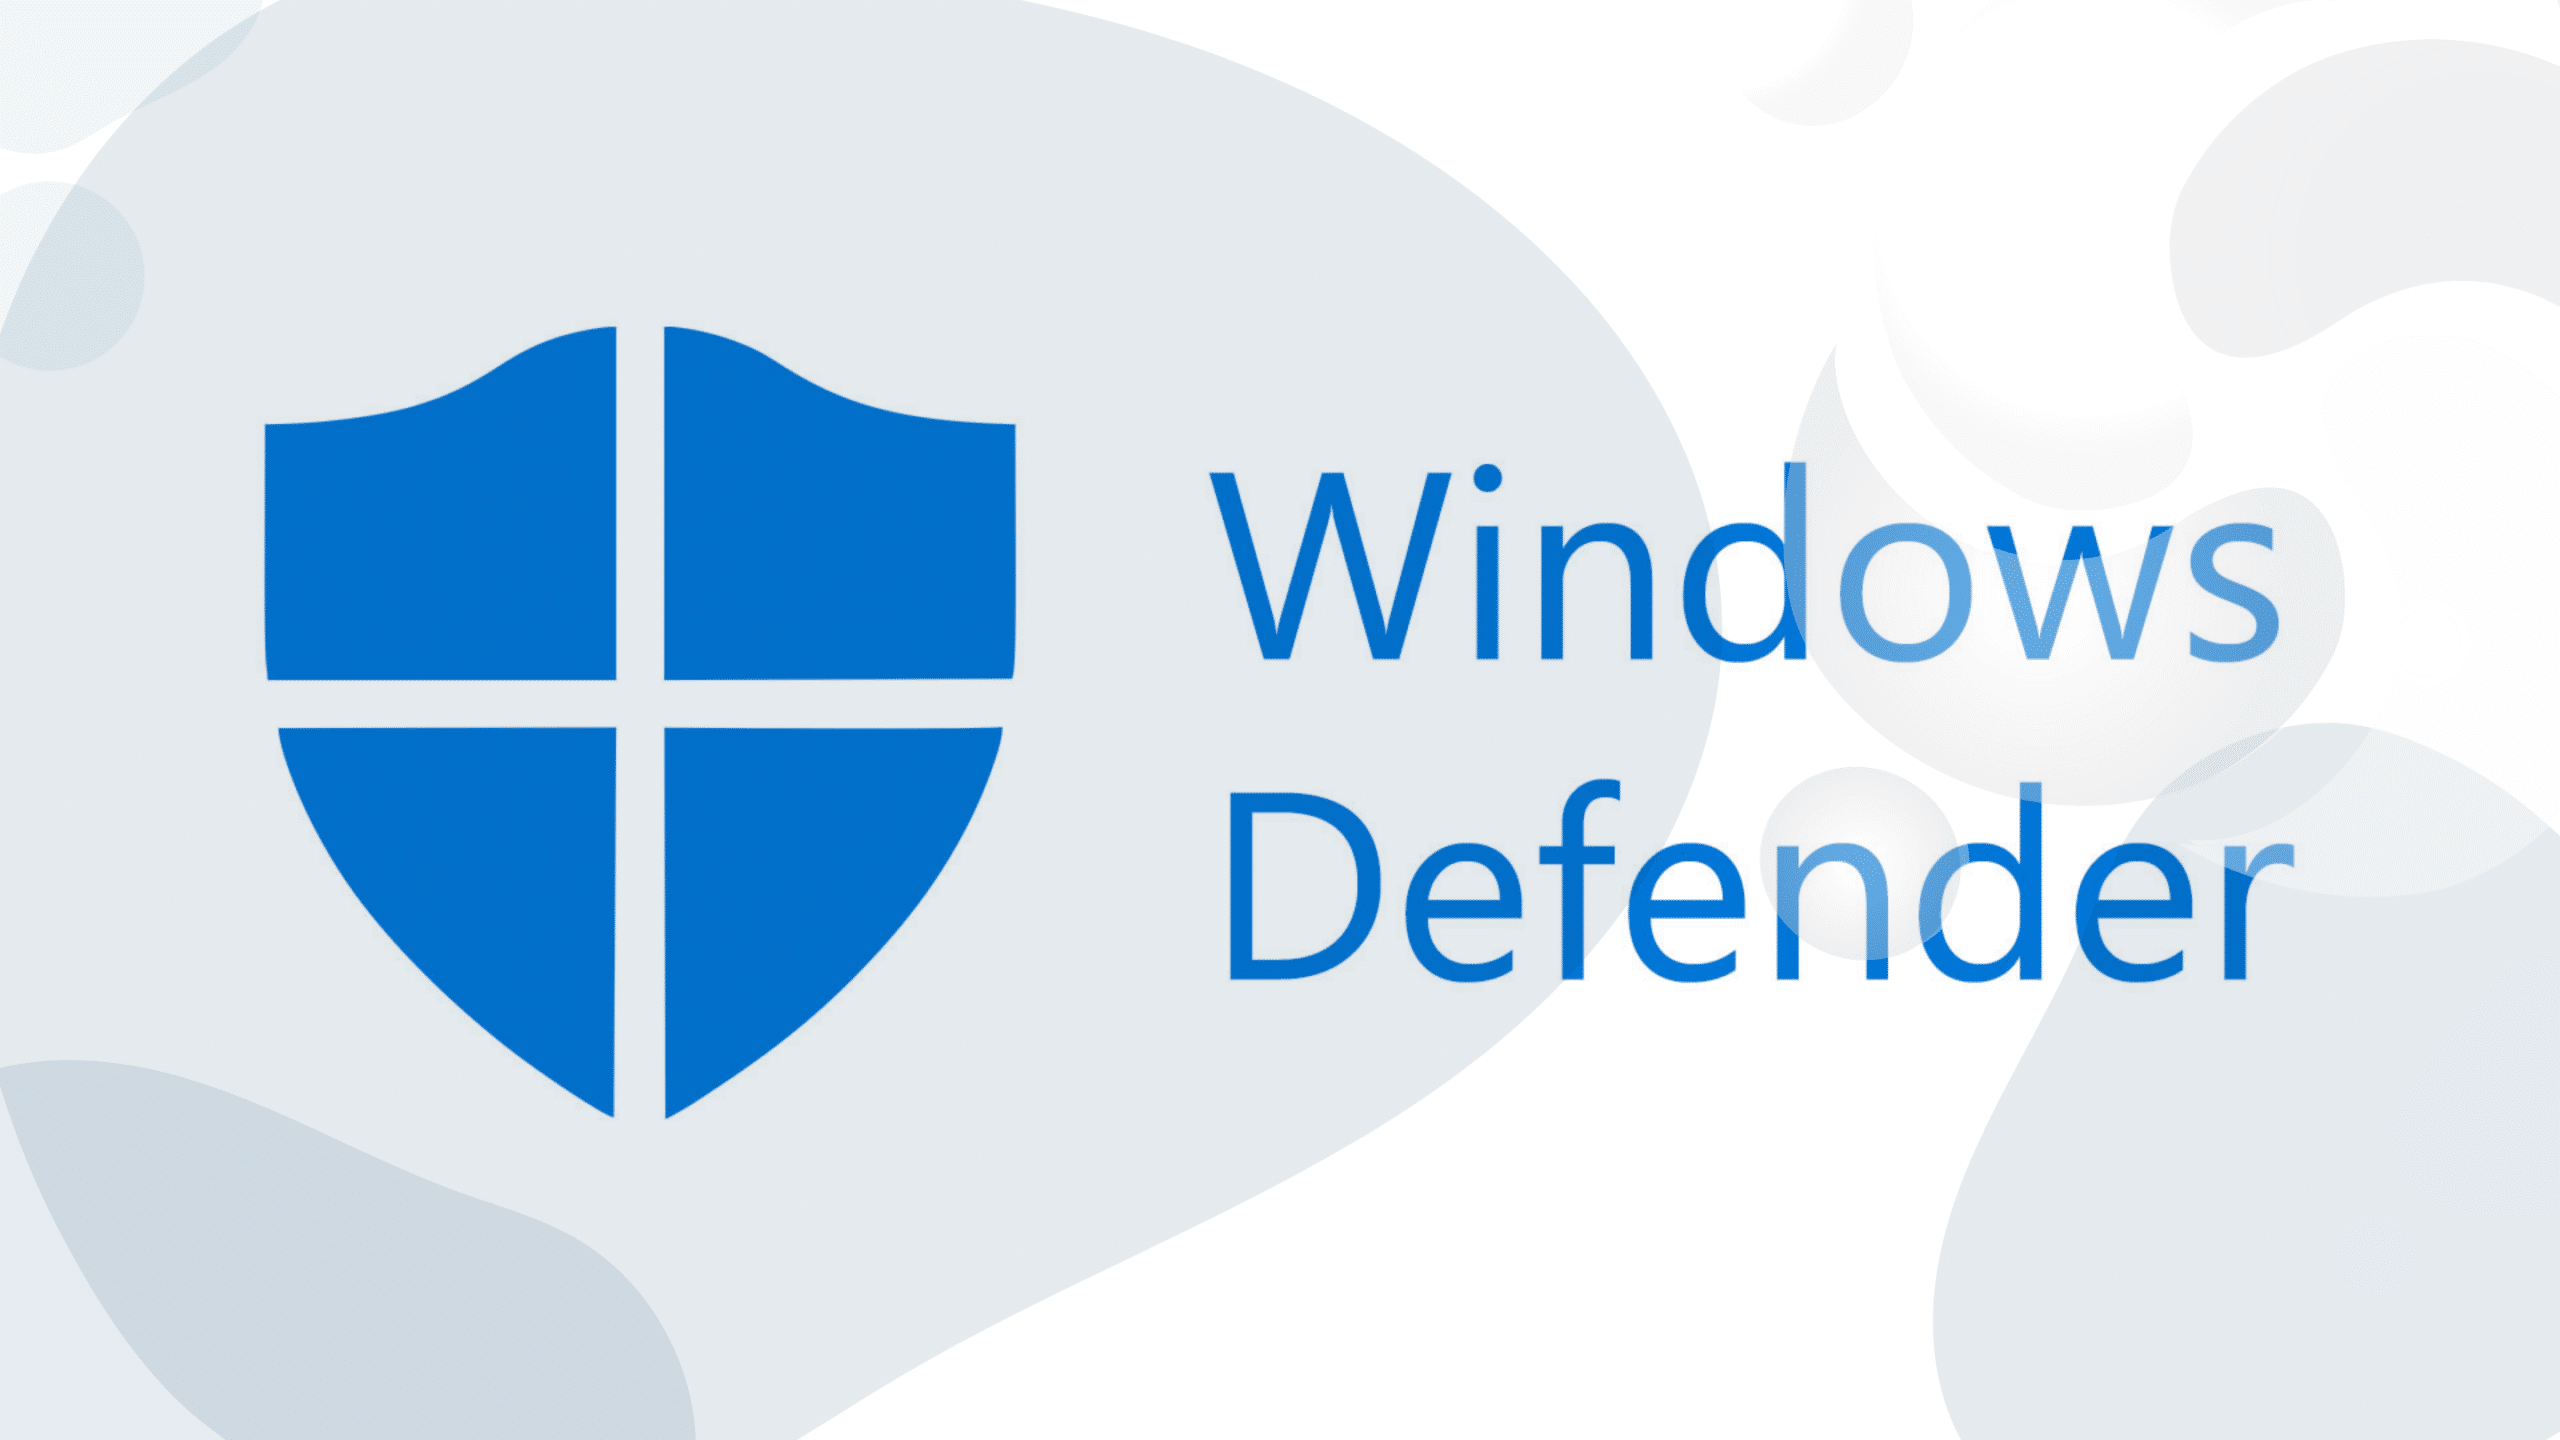 microsoft-corrige-falha-do-windows-defender